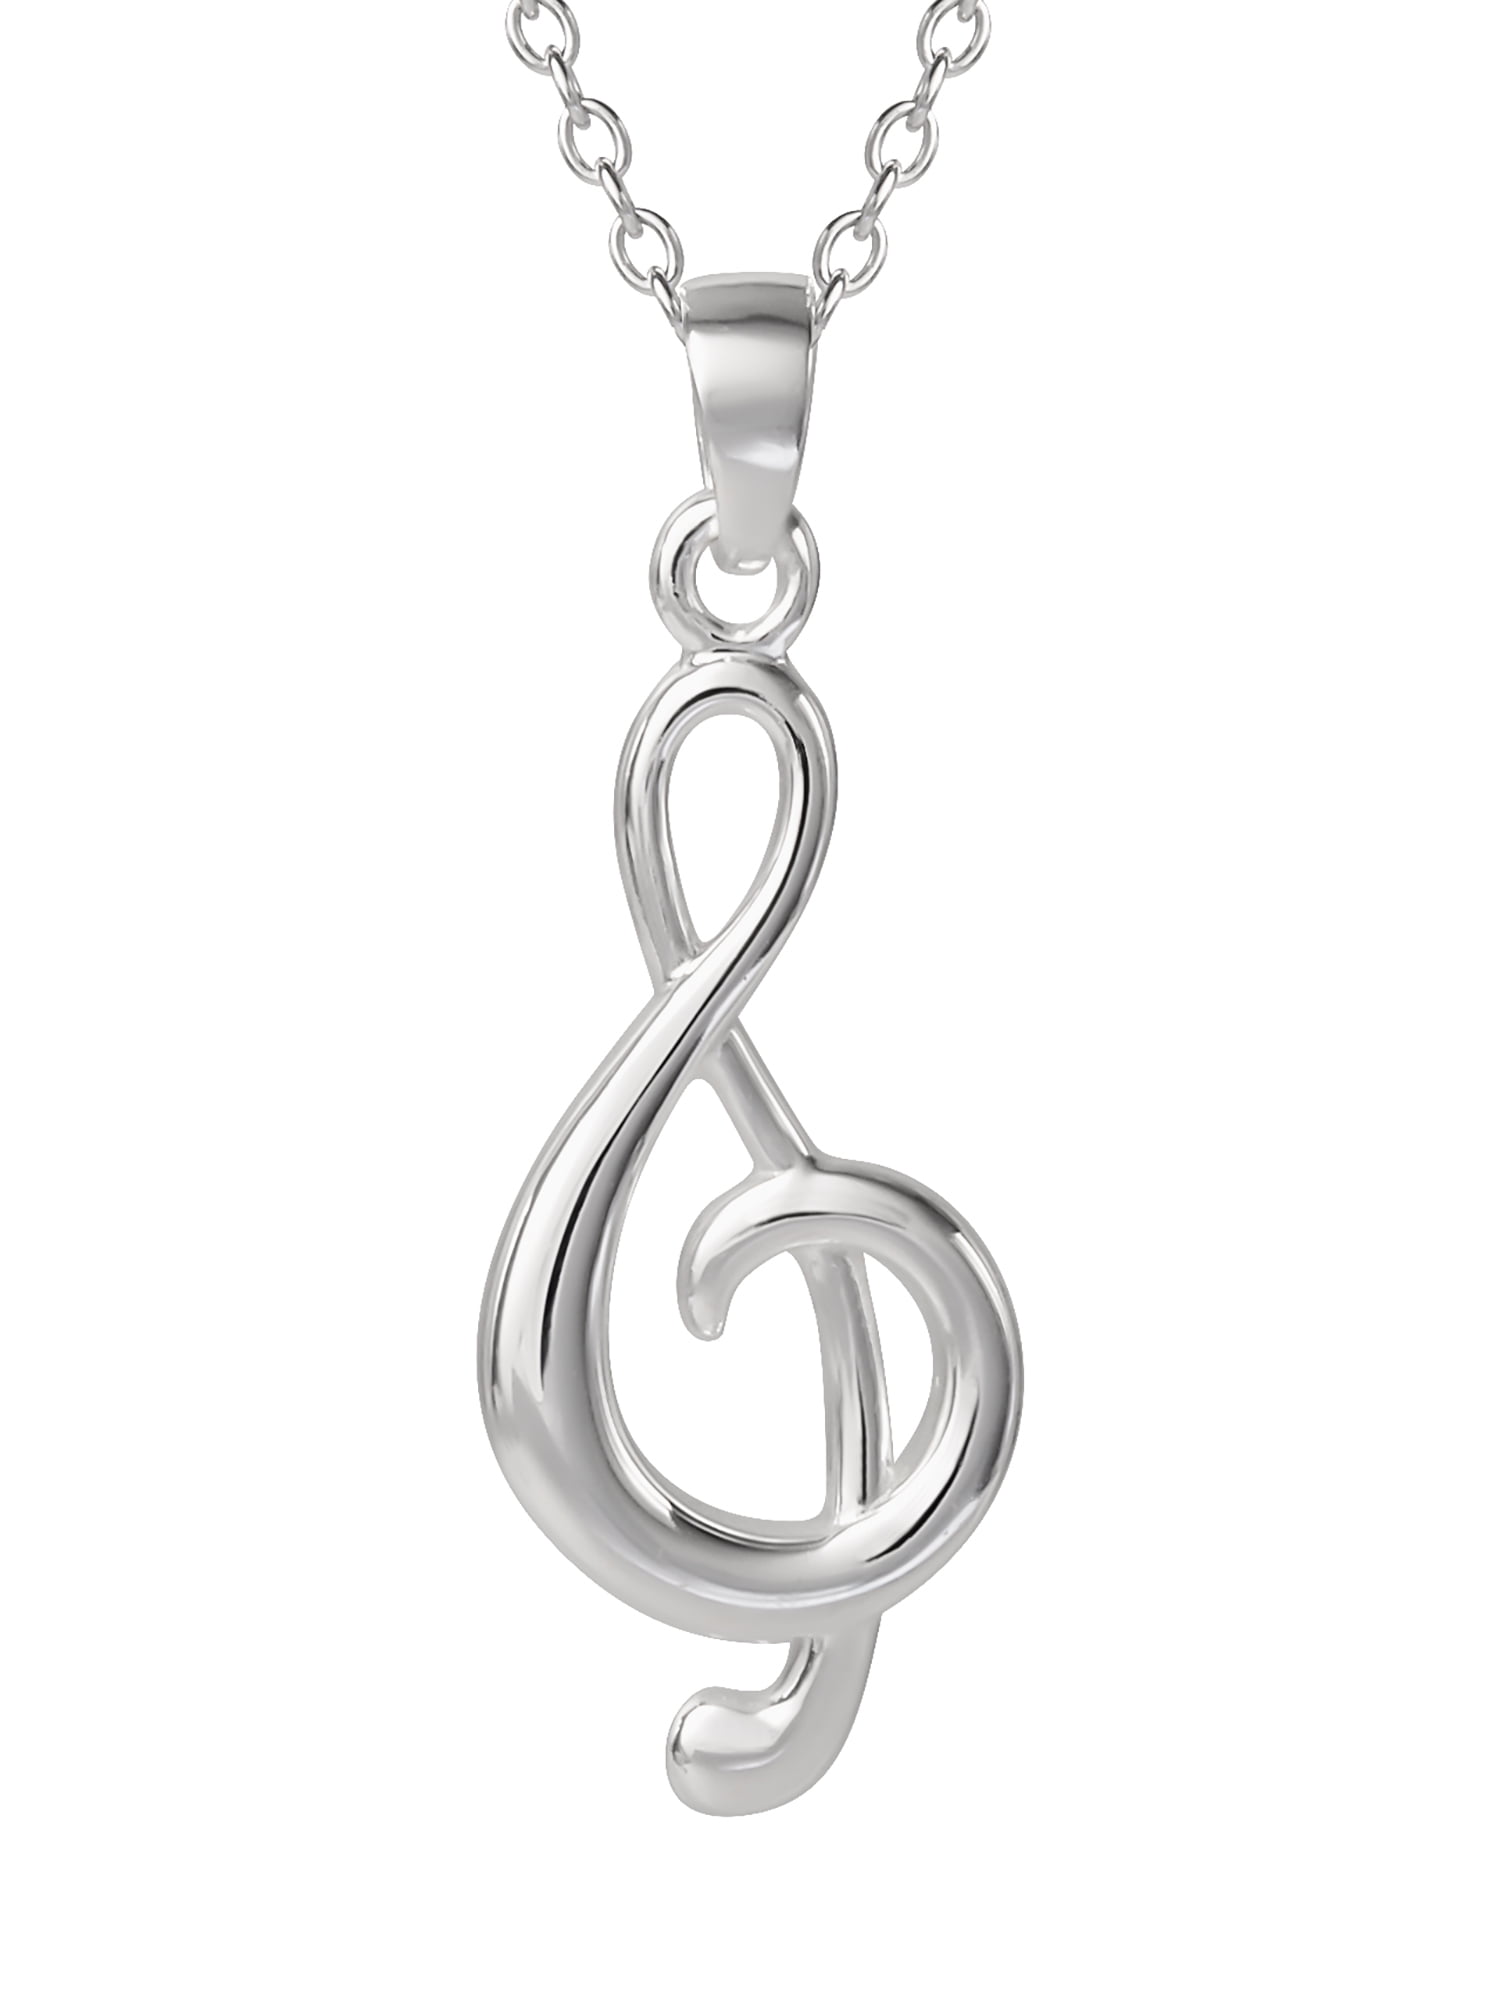 Hallmark Jewelry Sterling Silver Treble Clef Pendant Necklace, 18 Chain